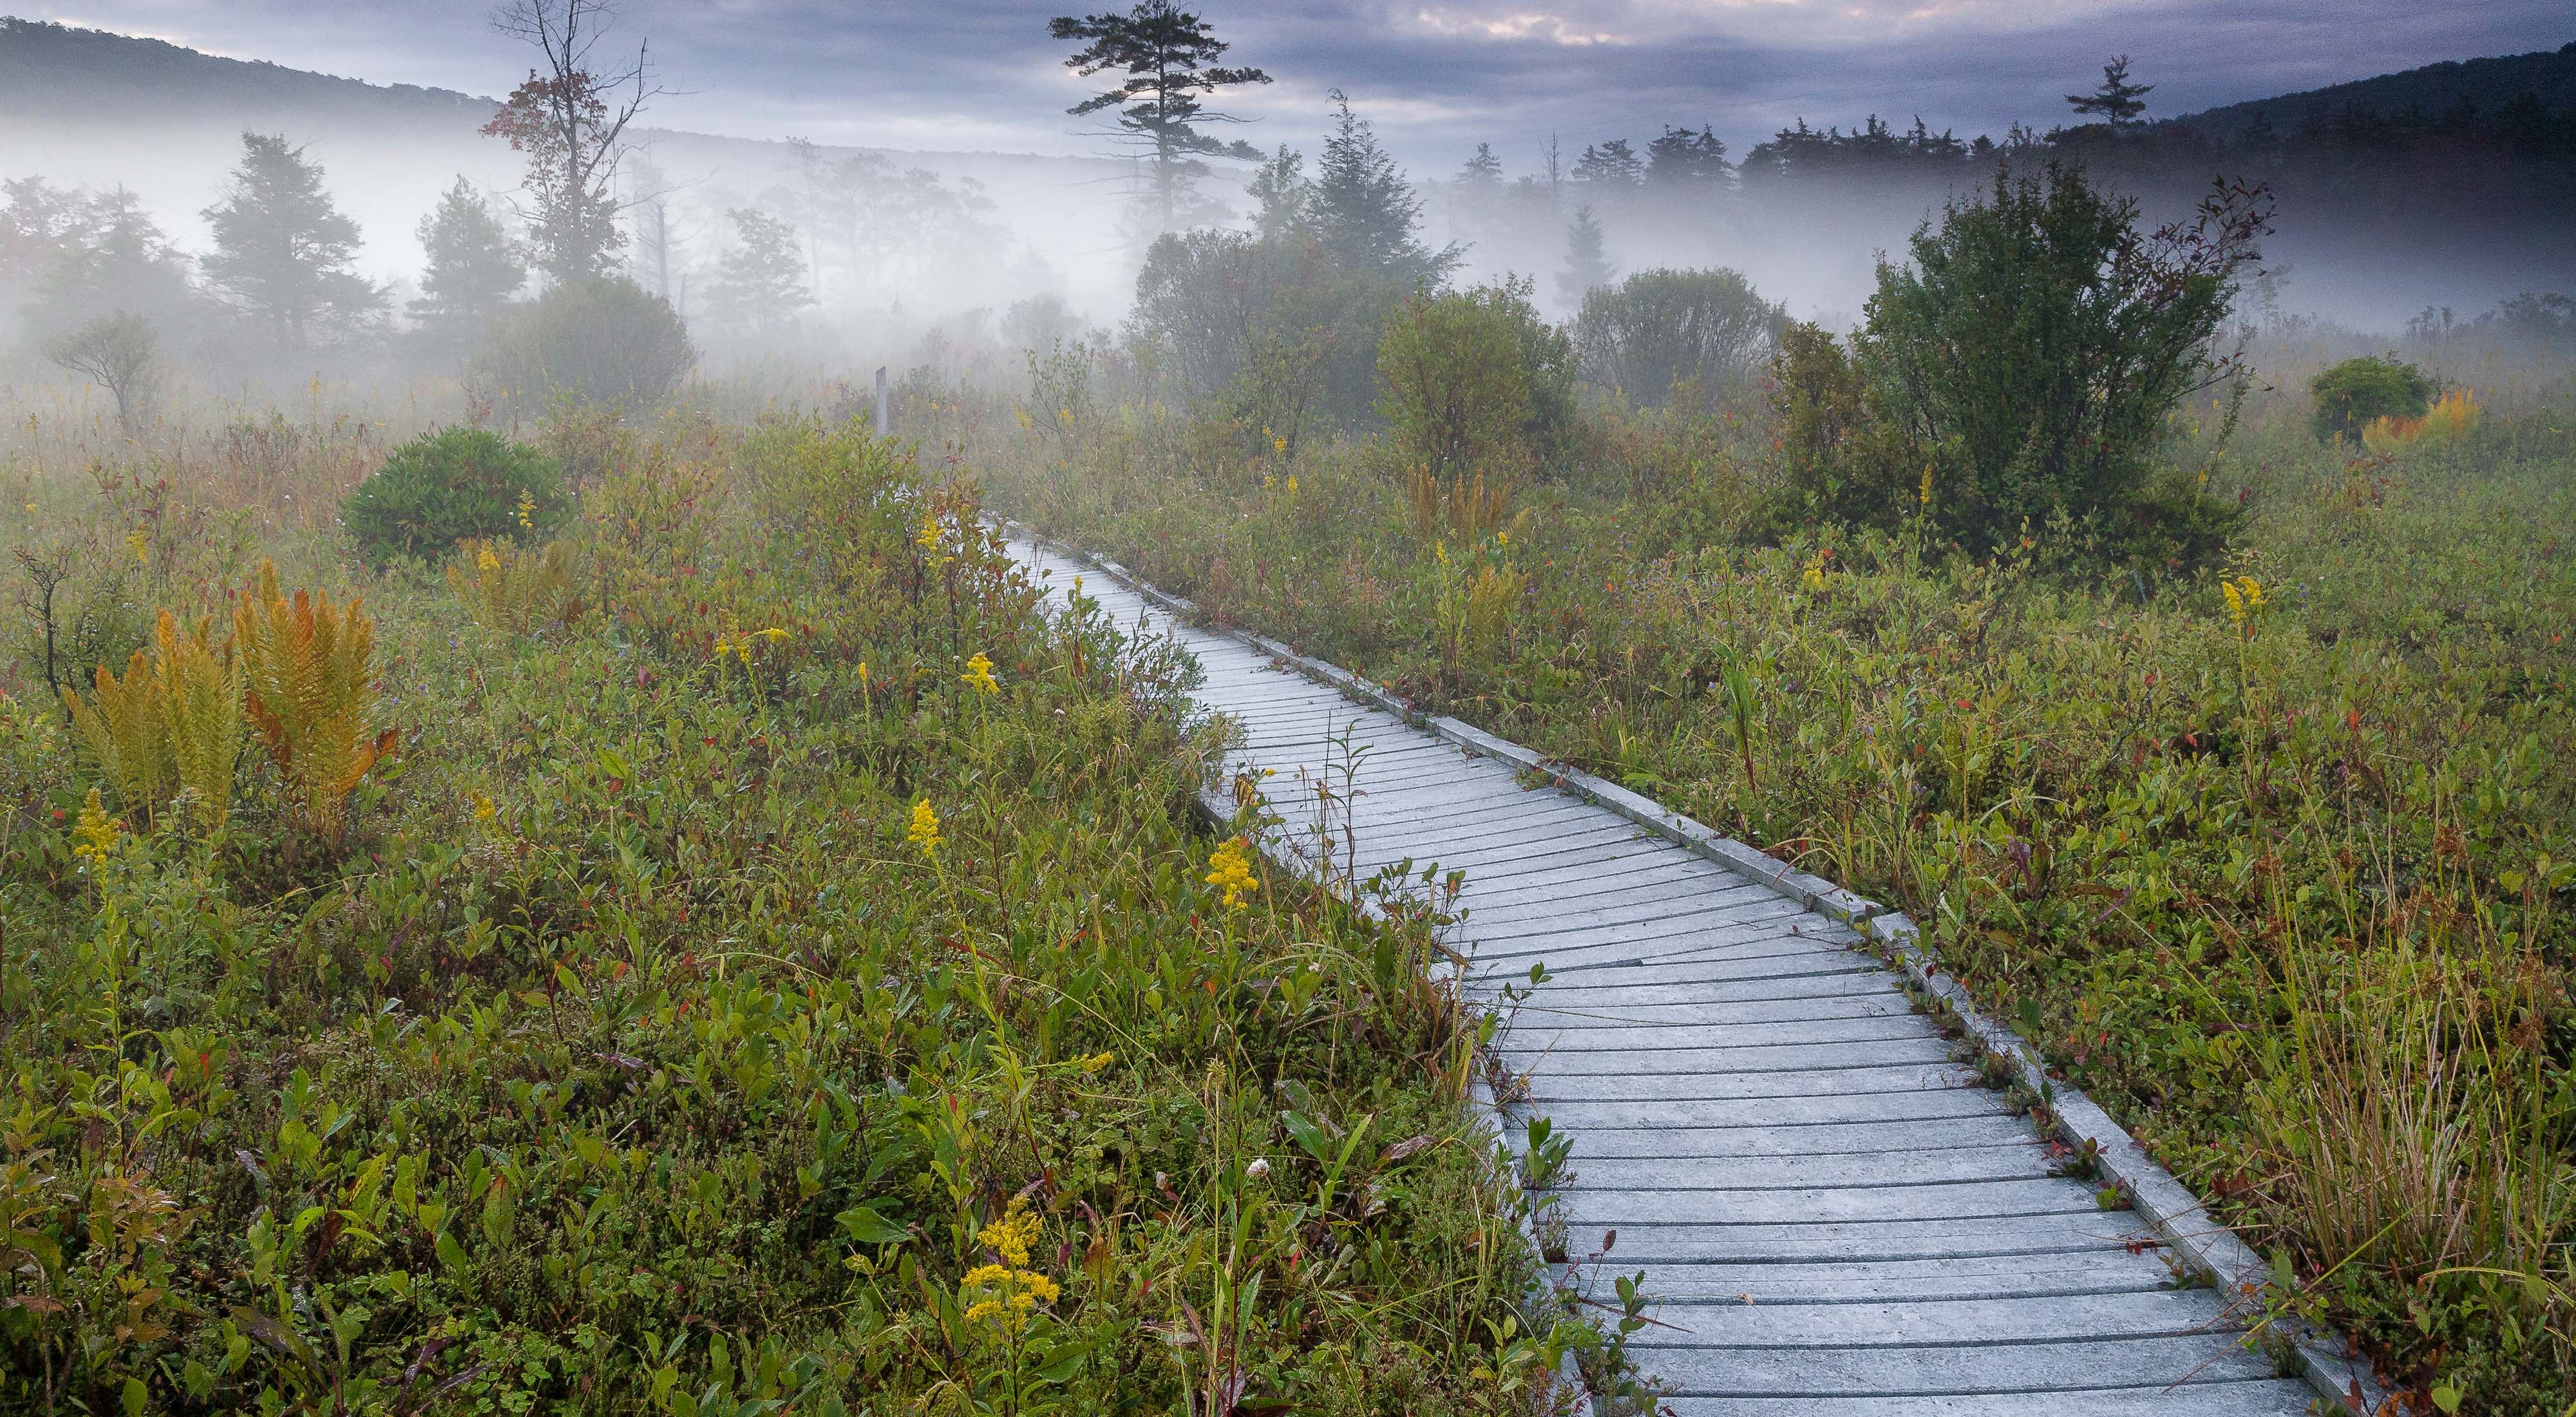 A boardwalk winds through thick foliage shrouded in fog.